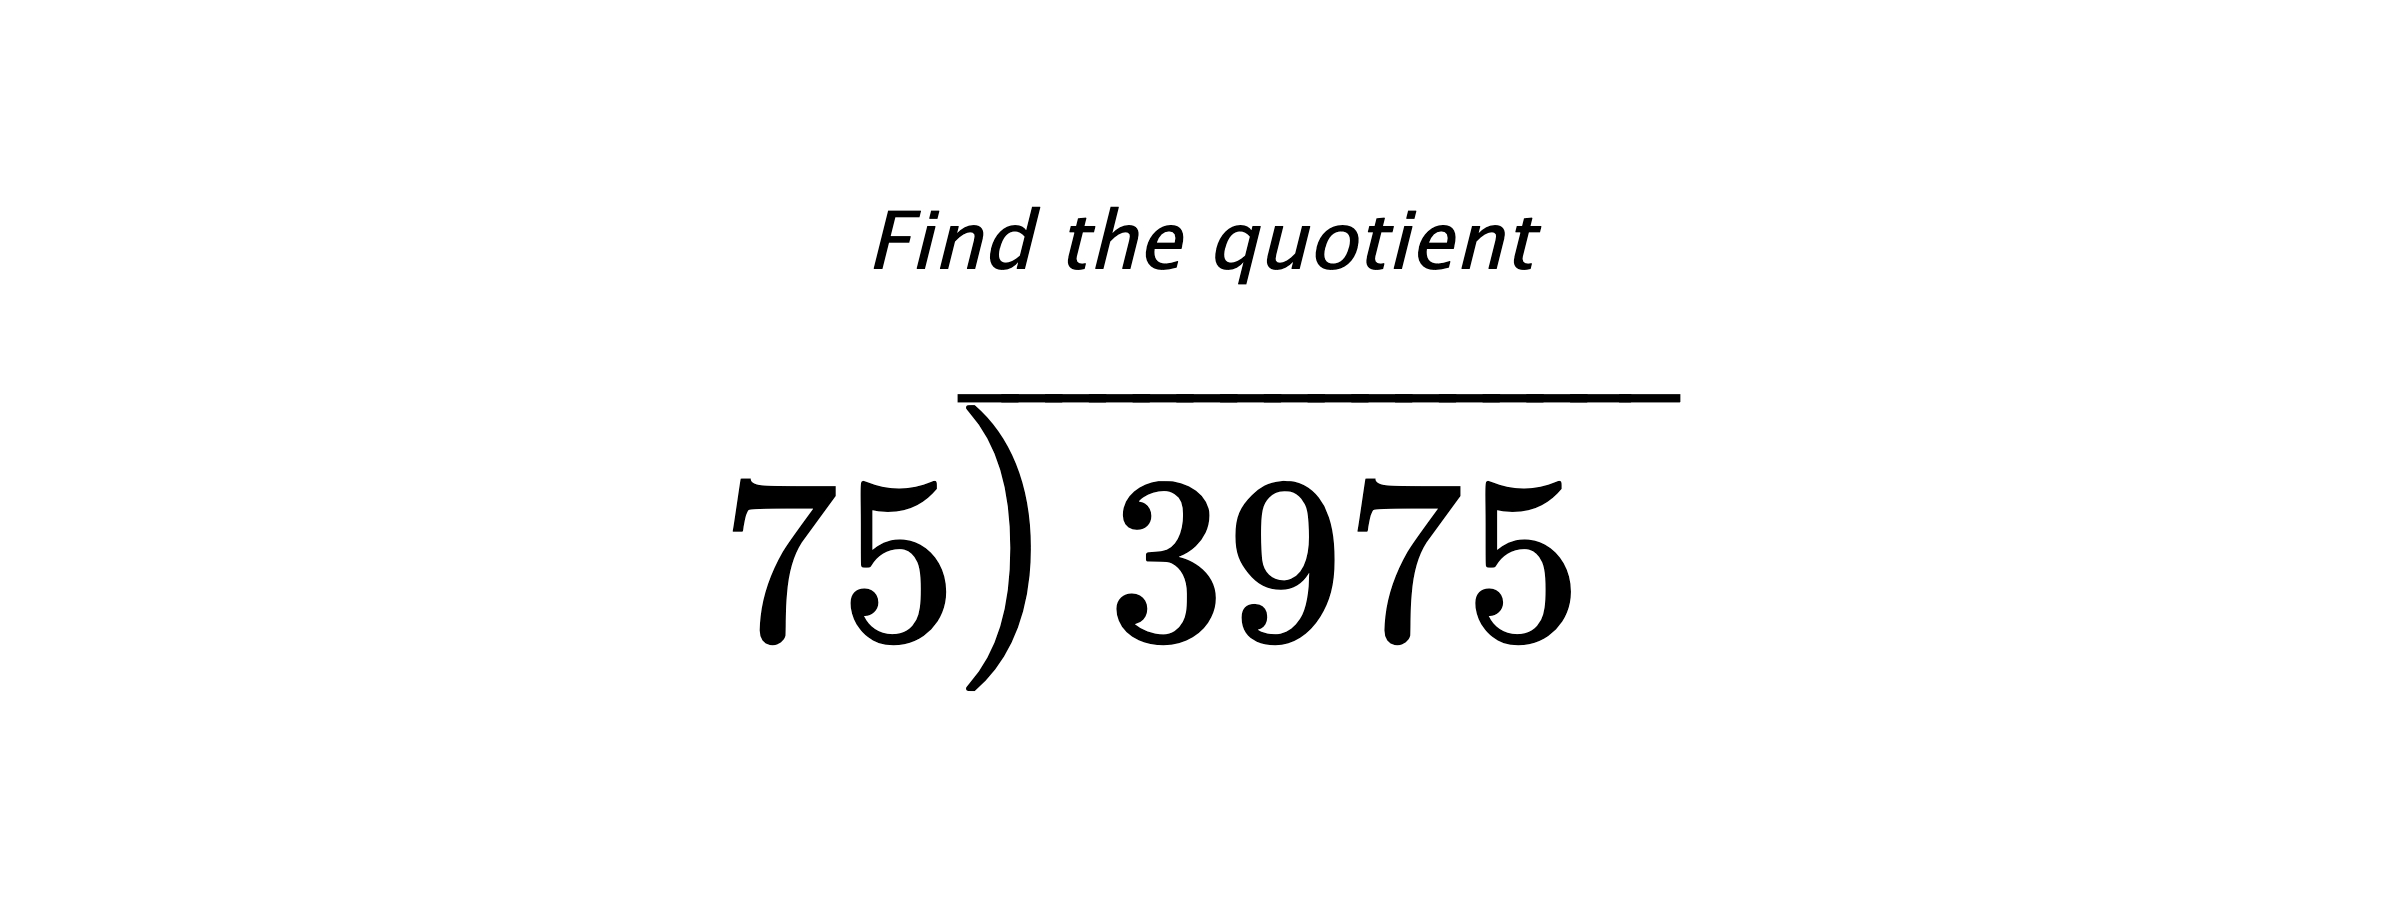 Find the quotient $ 75{\overline{\smash{\raise.3ex\hbox{$\big)$}}\,3975\phantom{)}}} $